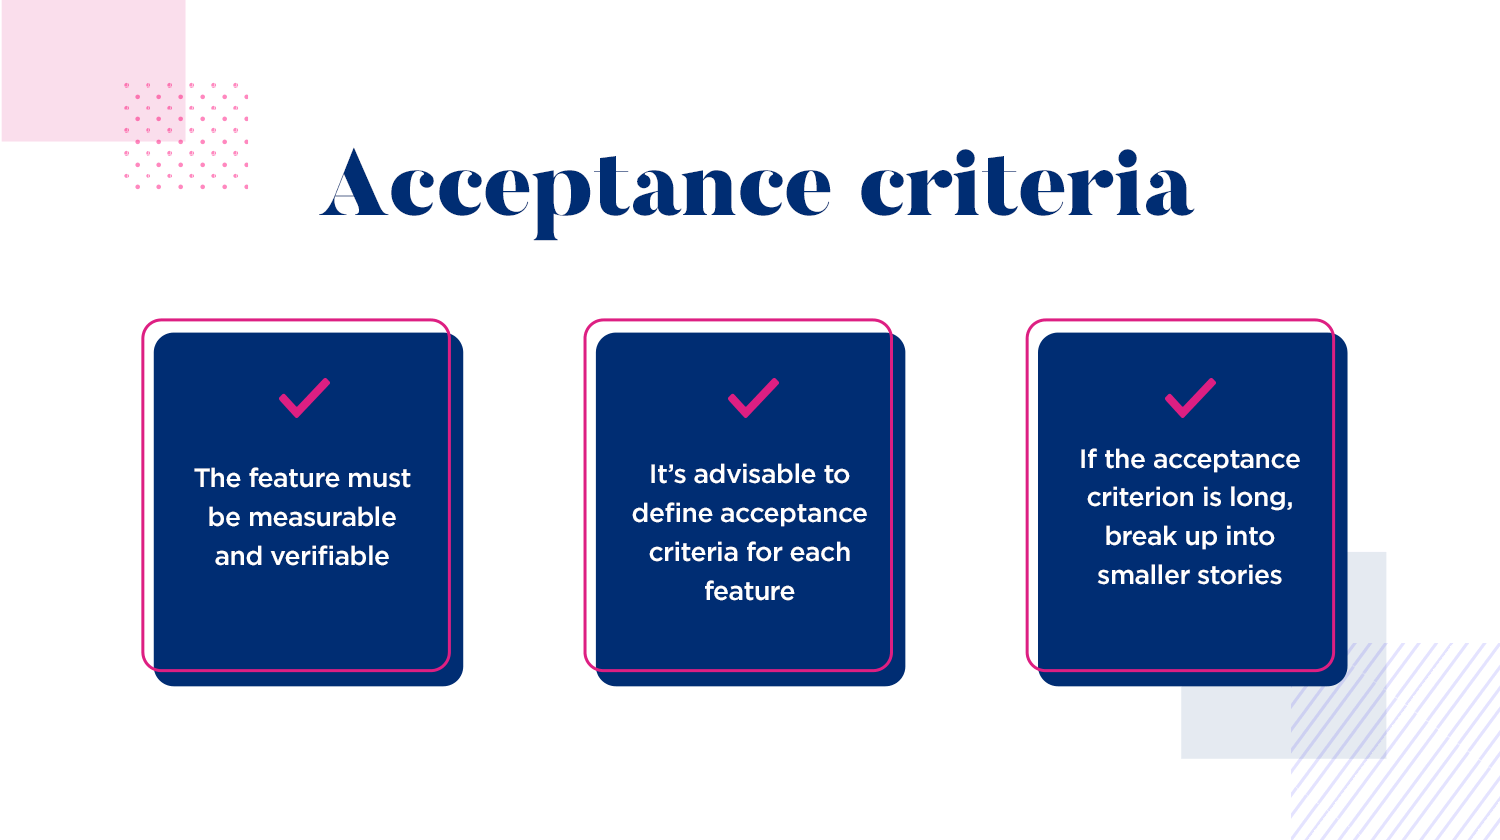 Acceptance criteria tips: measurable, define for each feature, break long criteria.